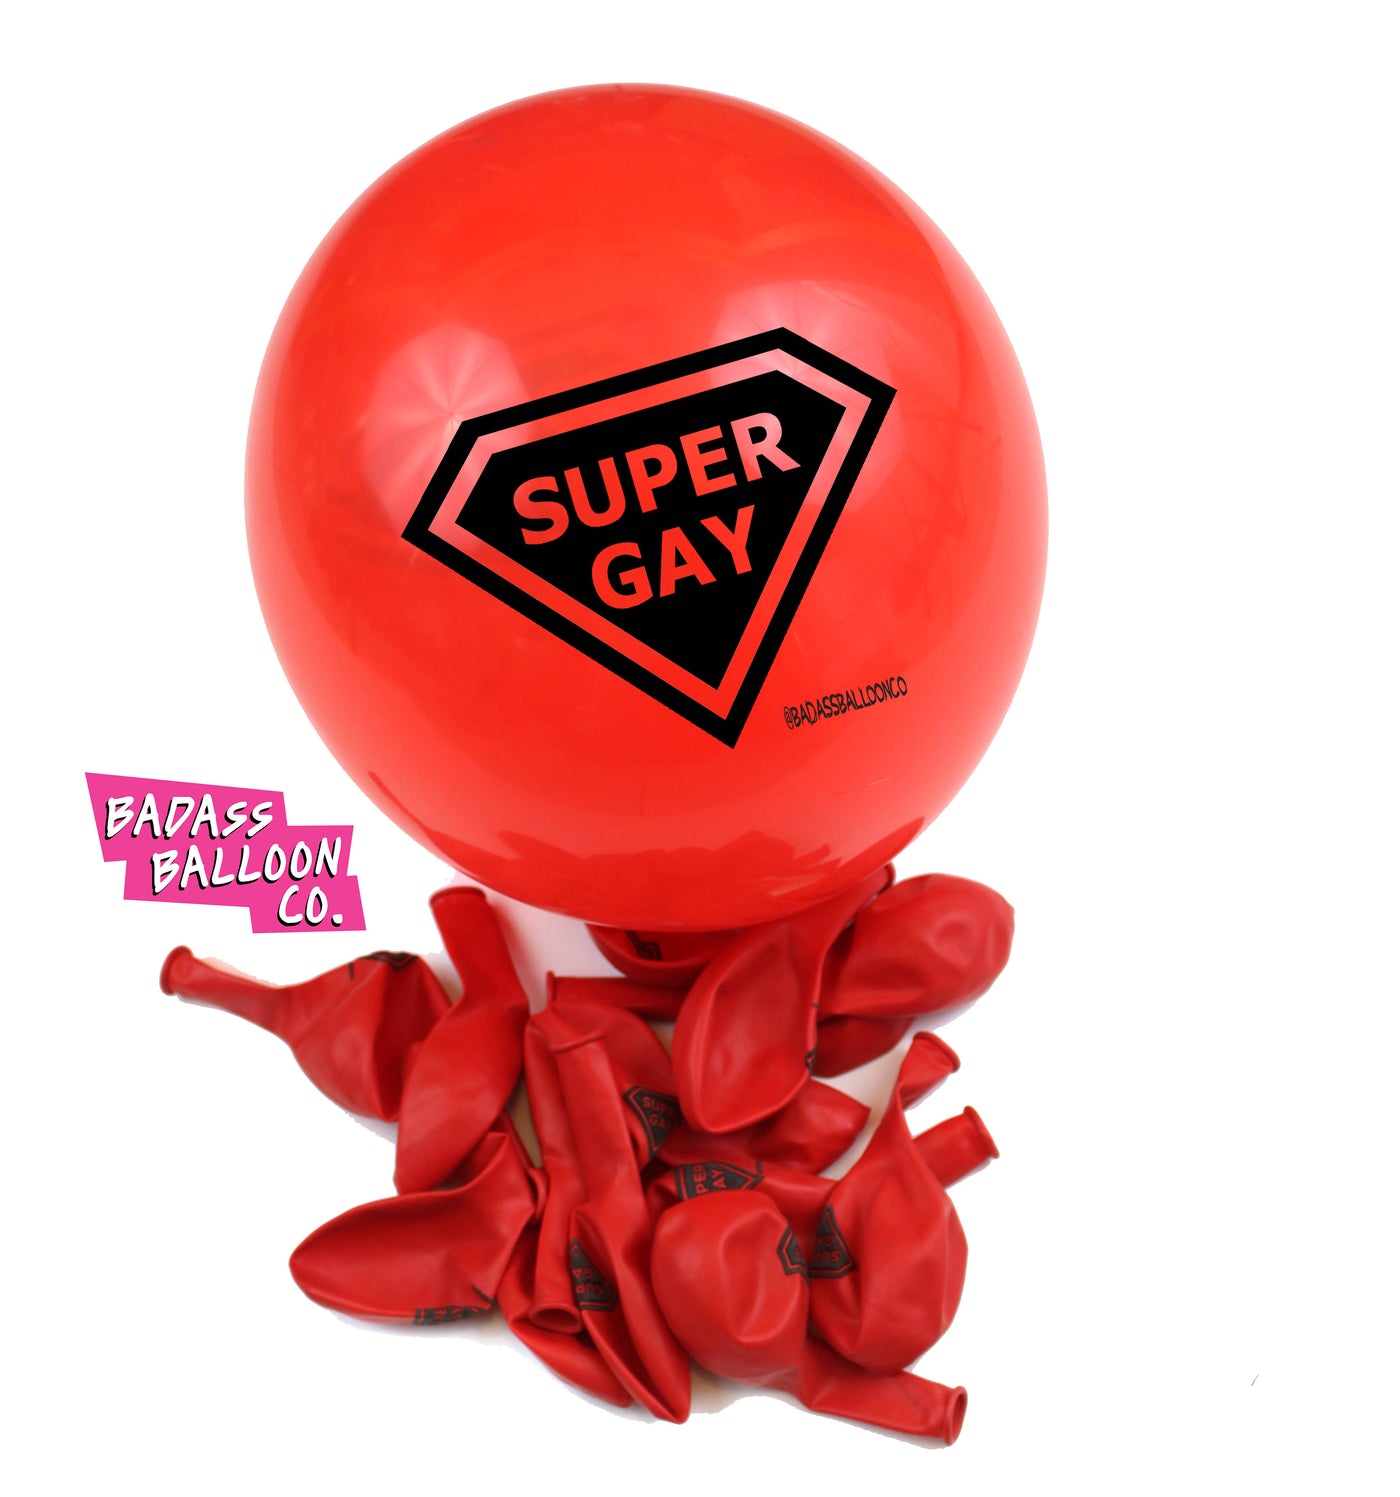 SUPER GAY Pride and Birthday Balloons. Natural Latex. 100% Biodegradable. Badass Balloons. Party Supplies.